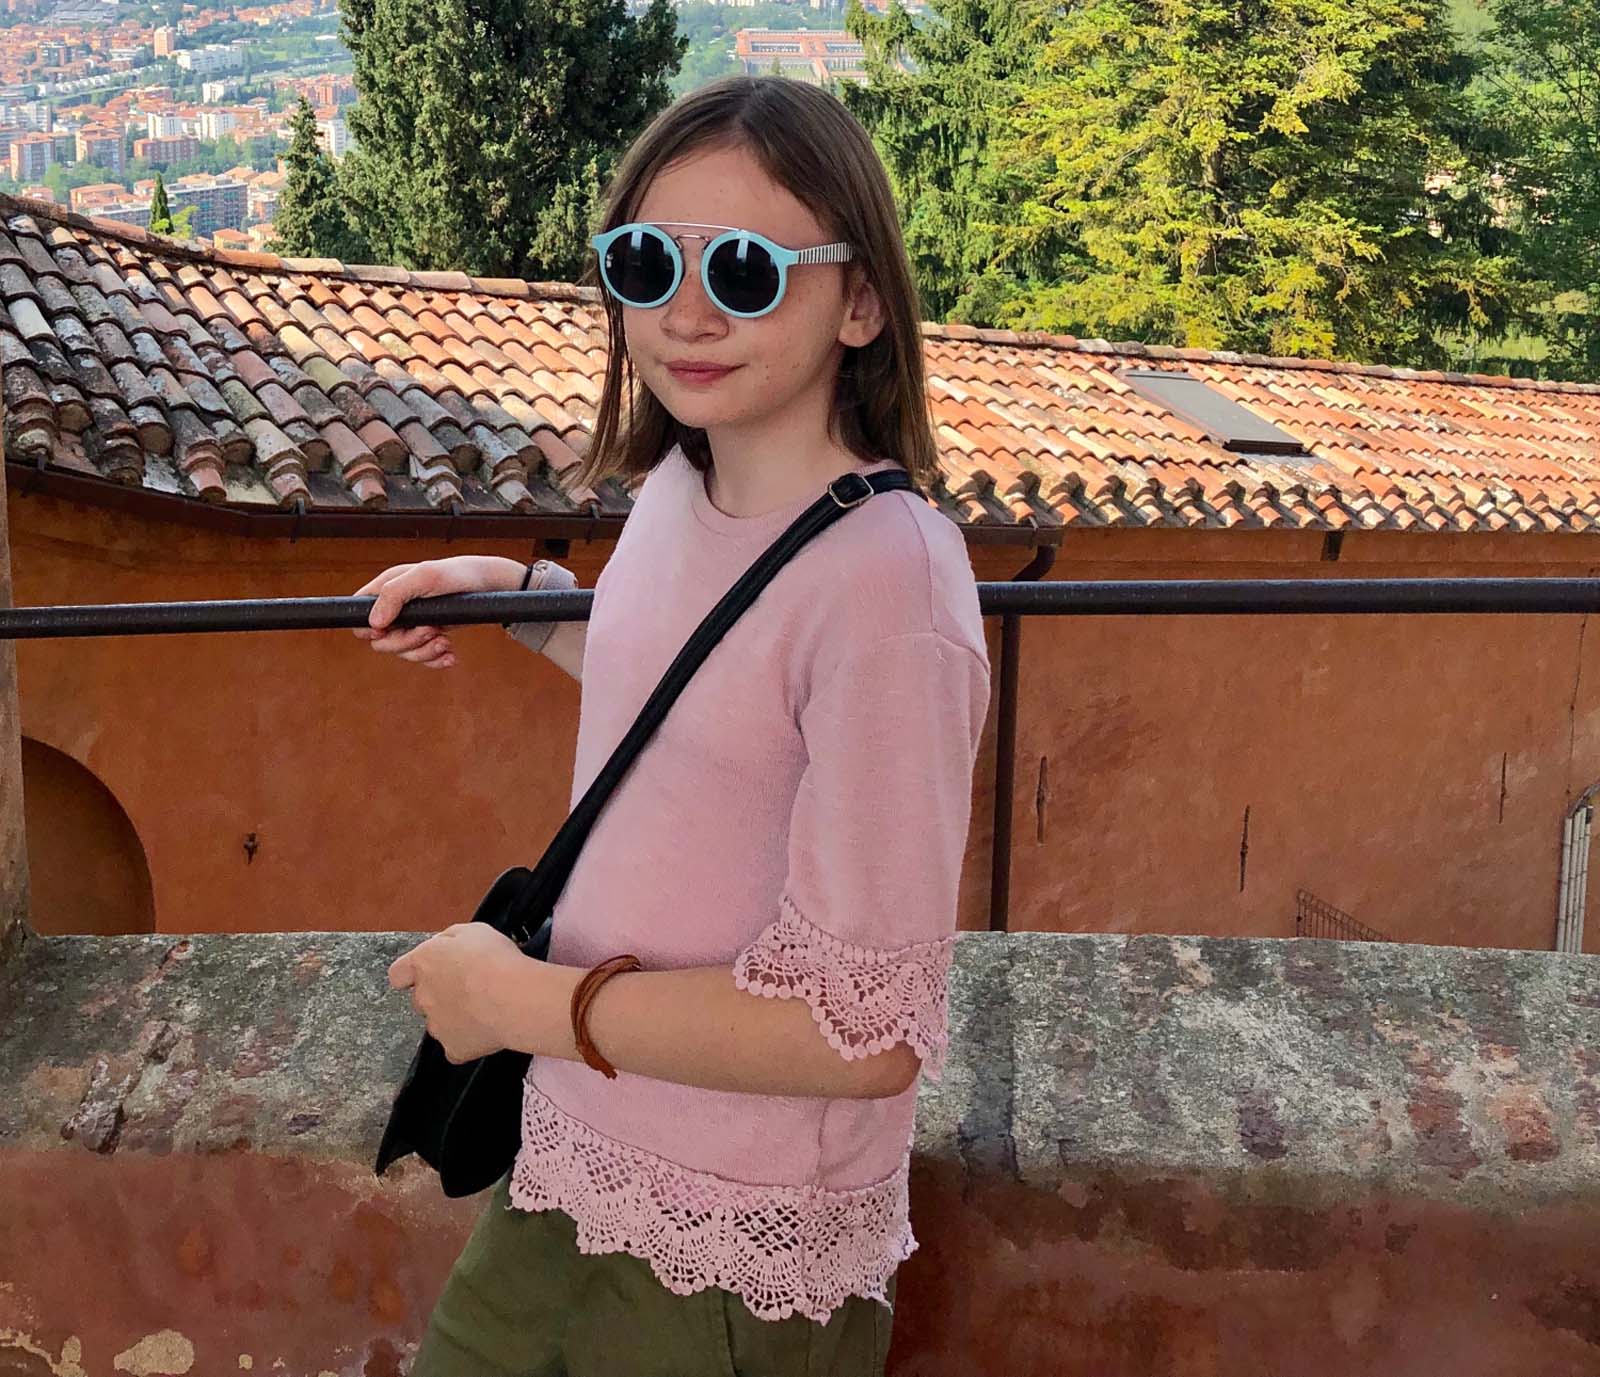 Sophia on a trip in Italy